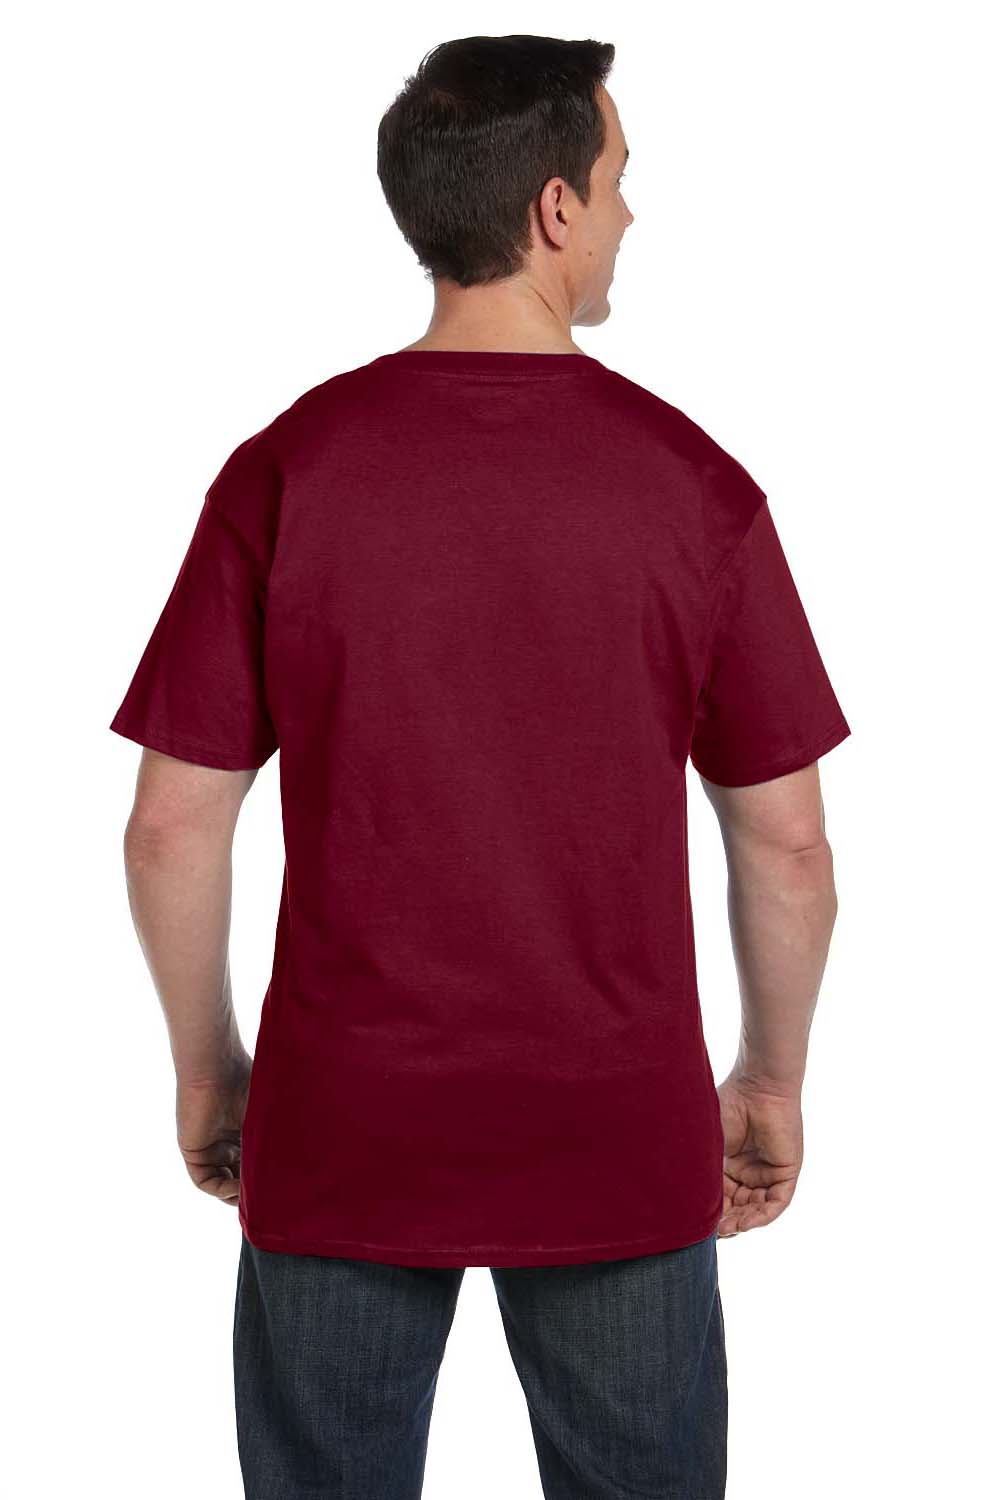 Hanes 5190P Mens Beefy-T Short Sleeve Crewneck T-Shirt w/ Pocket Cardinal Red Back